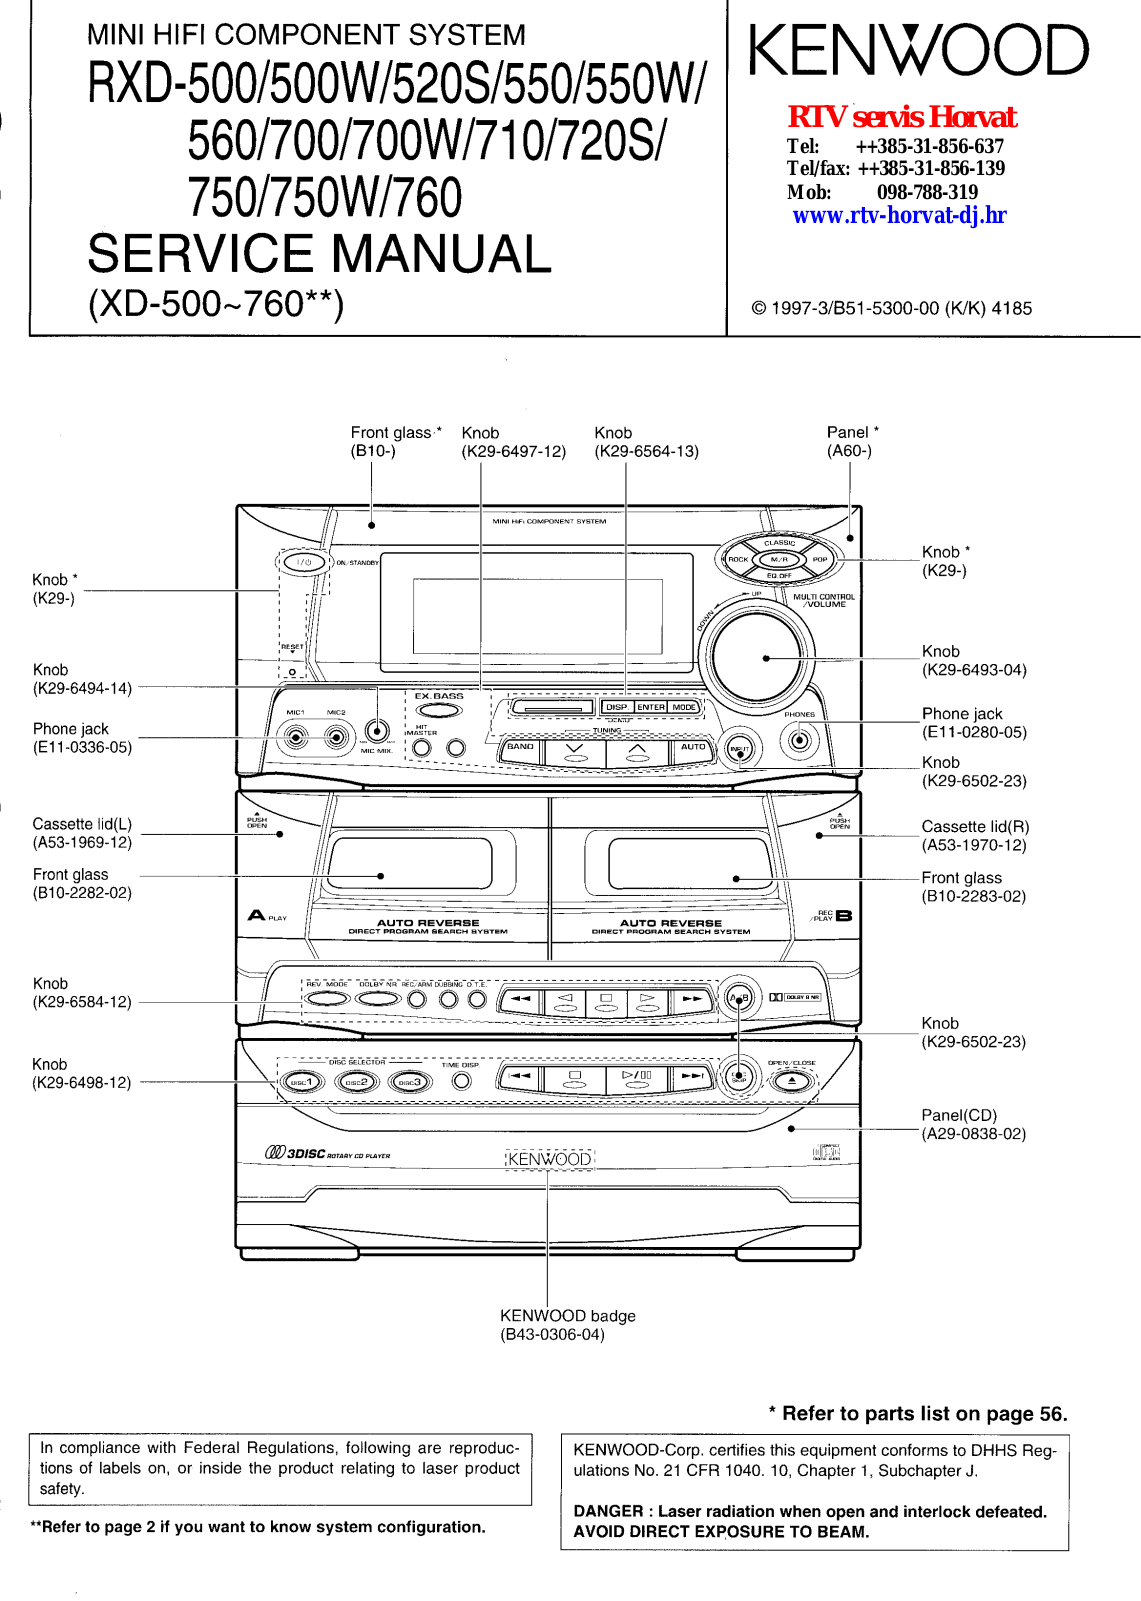 Kenwood RXD-500-W, RXD-520-S, RXD-550, RXD-550-W, RXD-560 Service manual